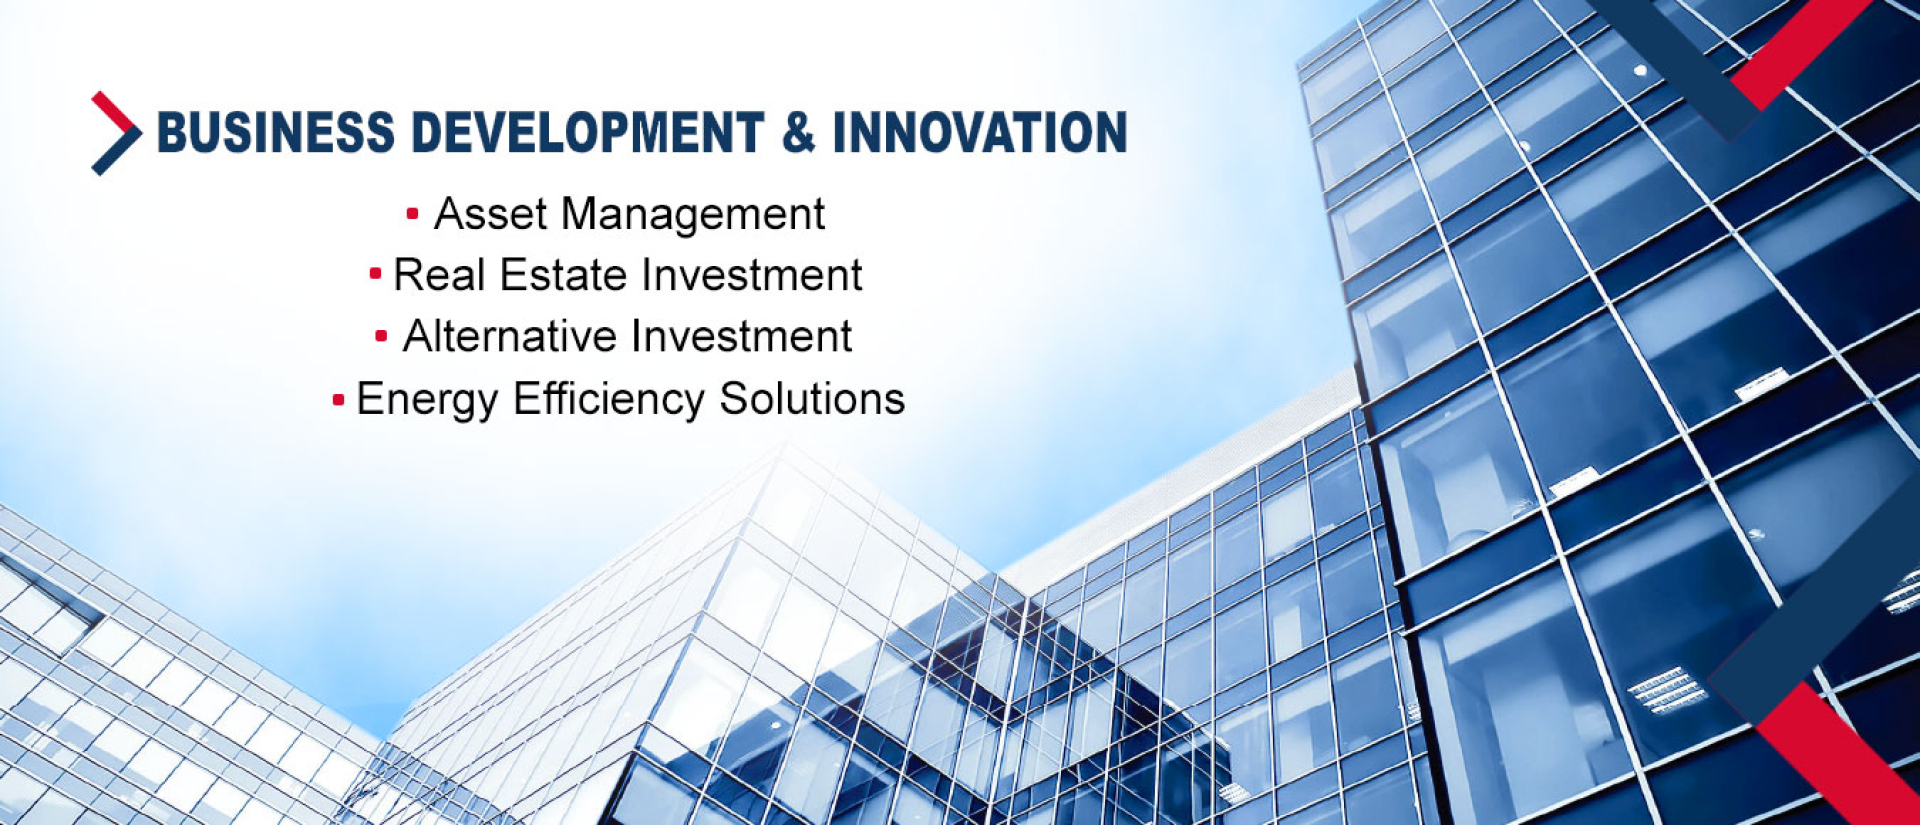 Business Development & Innovation